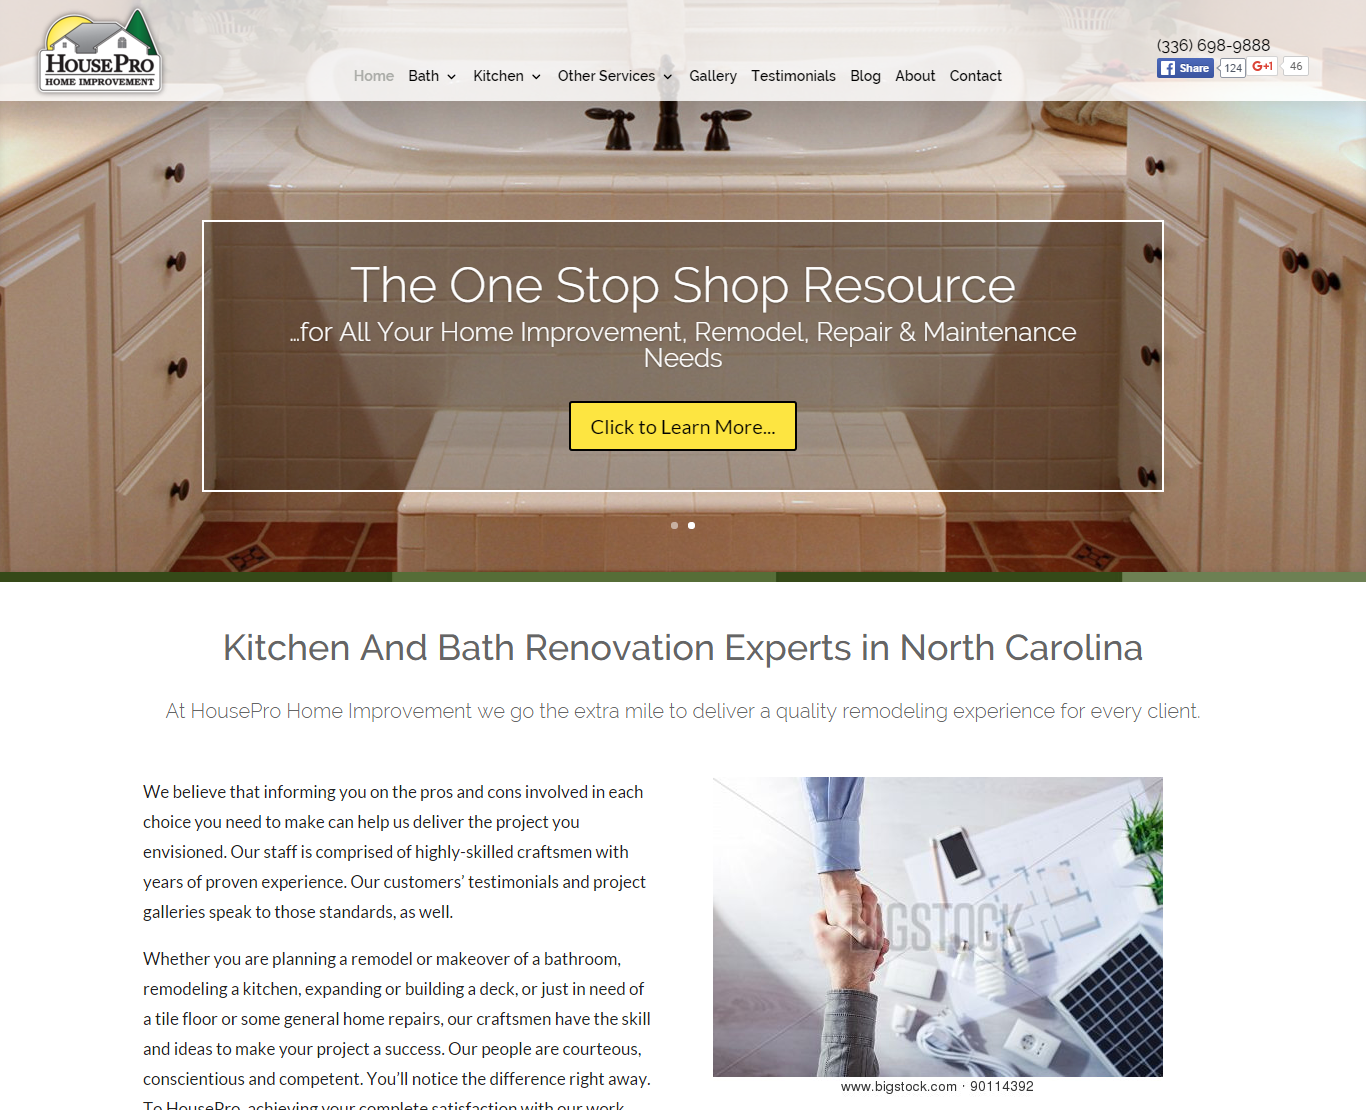 HousePro Home Improvement Website